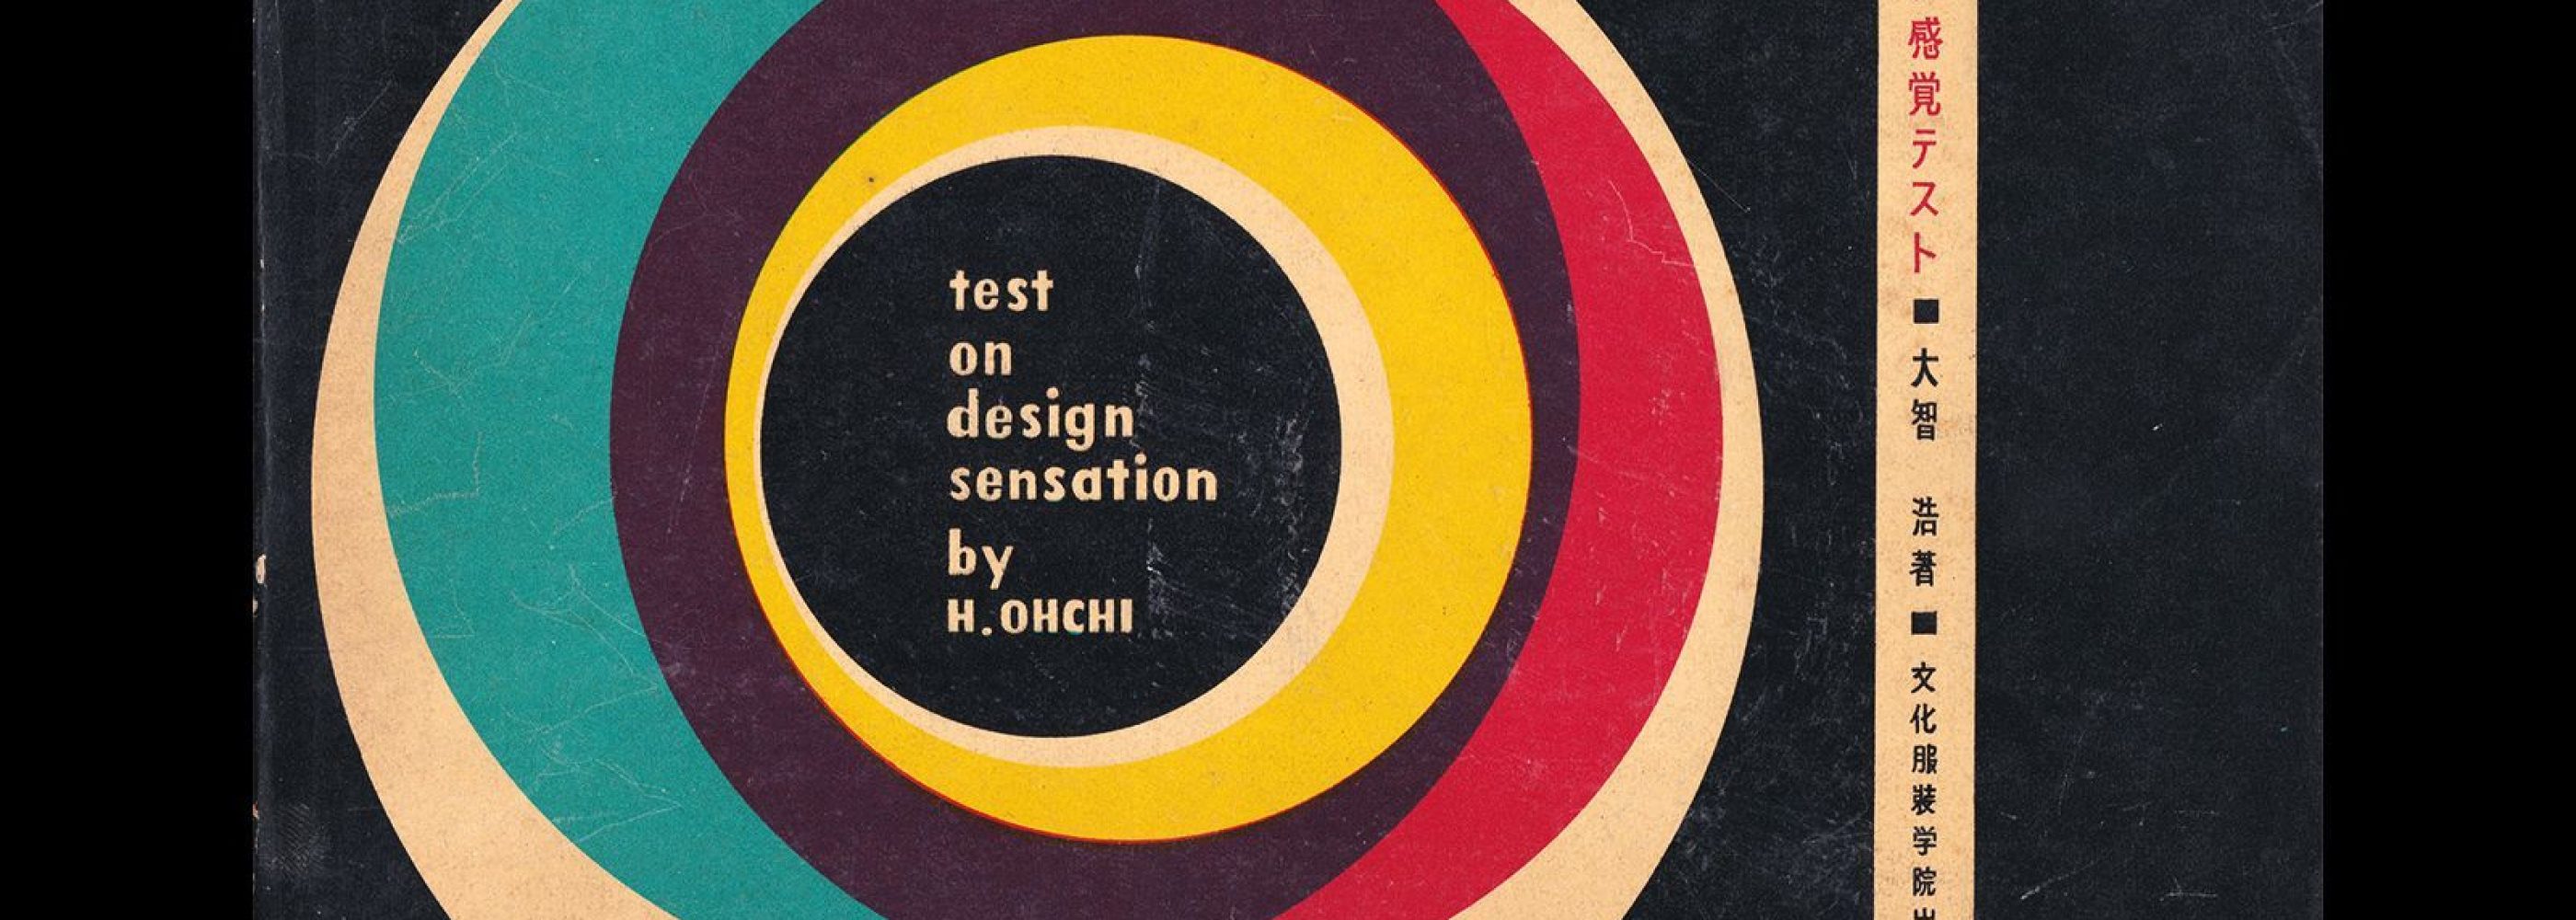 Test on Design Sensation, Hiroshi Ohchi, 1955. Designed by Hiroshi Ohchi